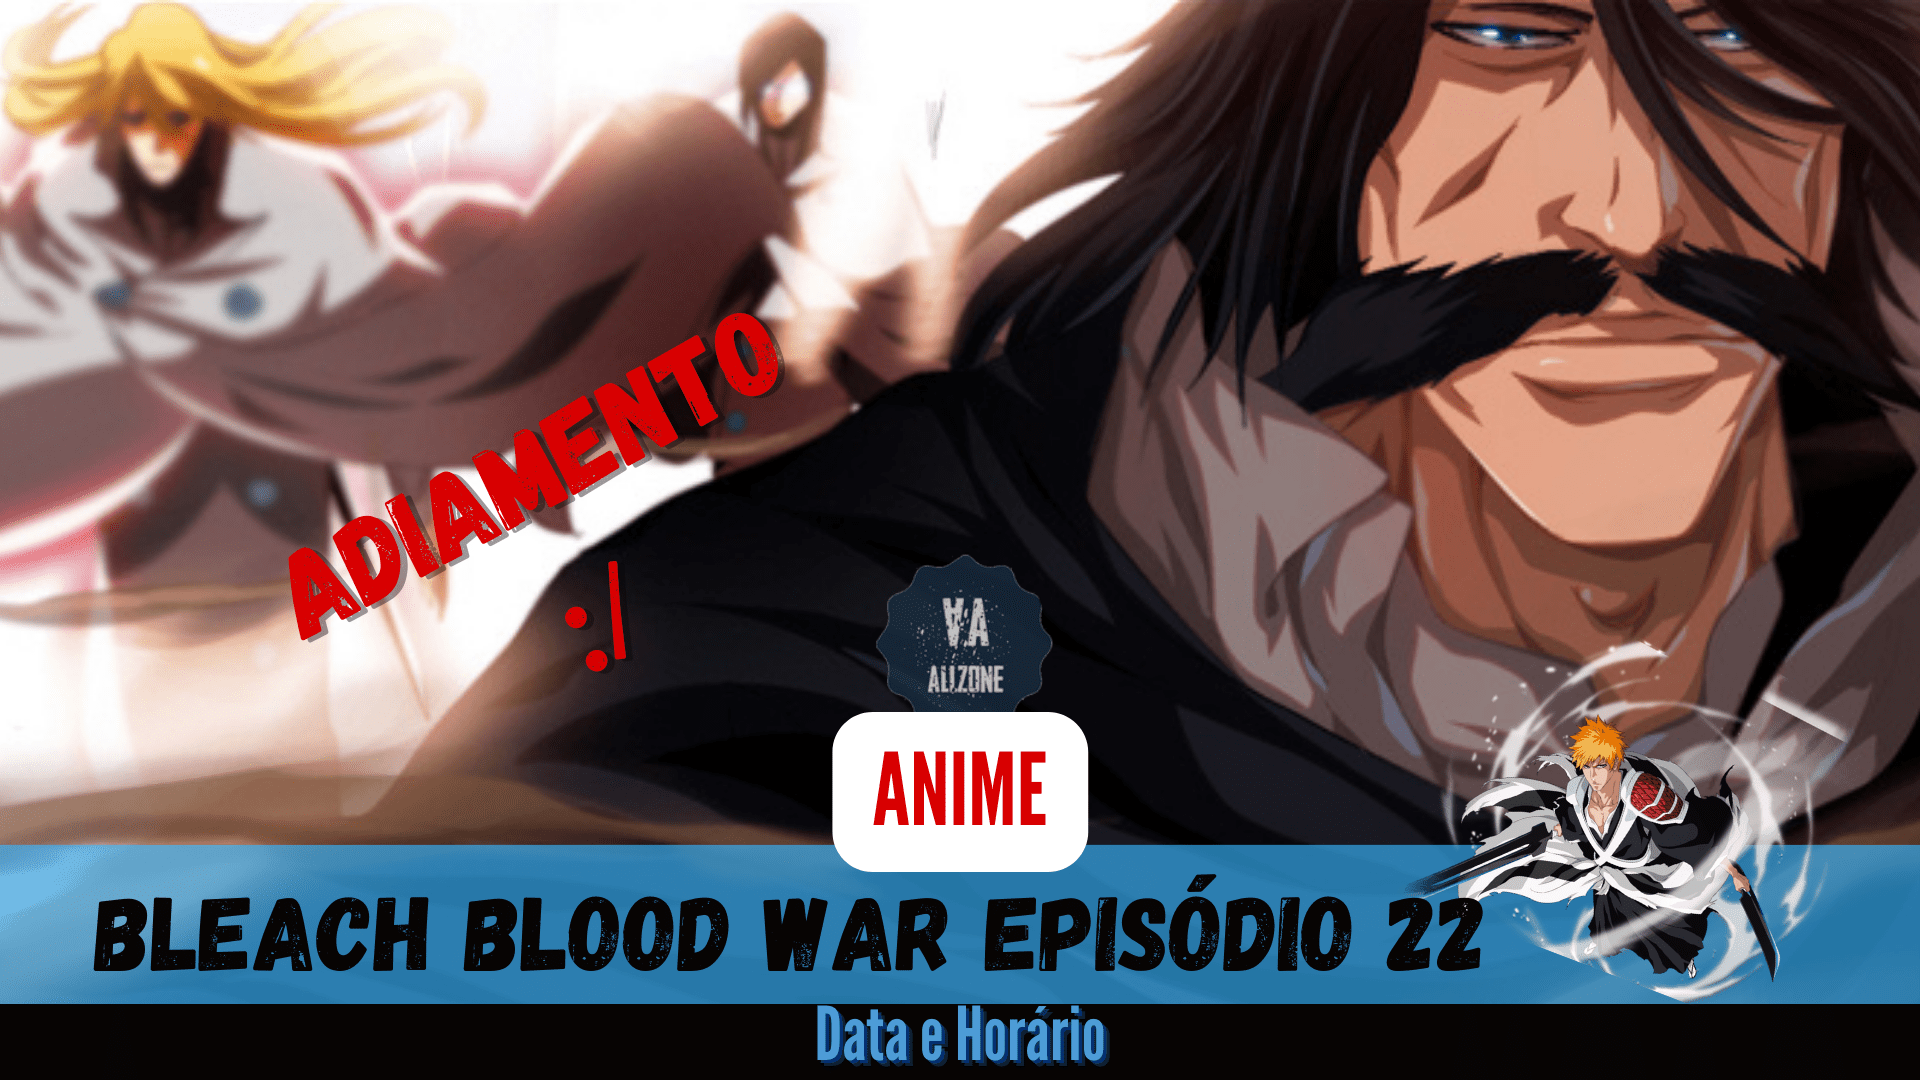 Assistir Blood+ Dublado Online completo